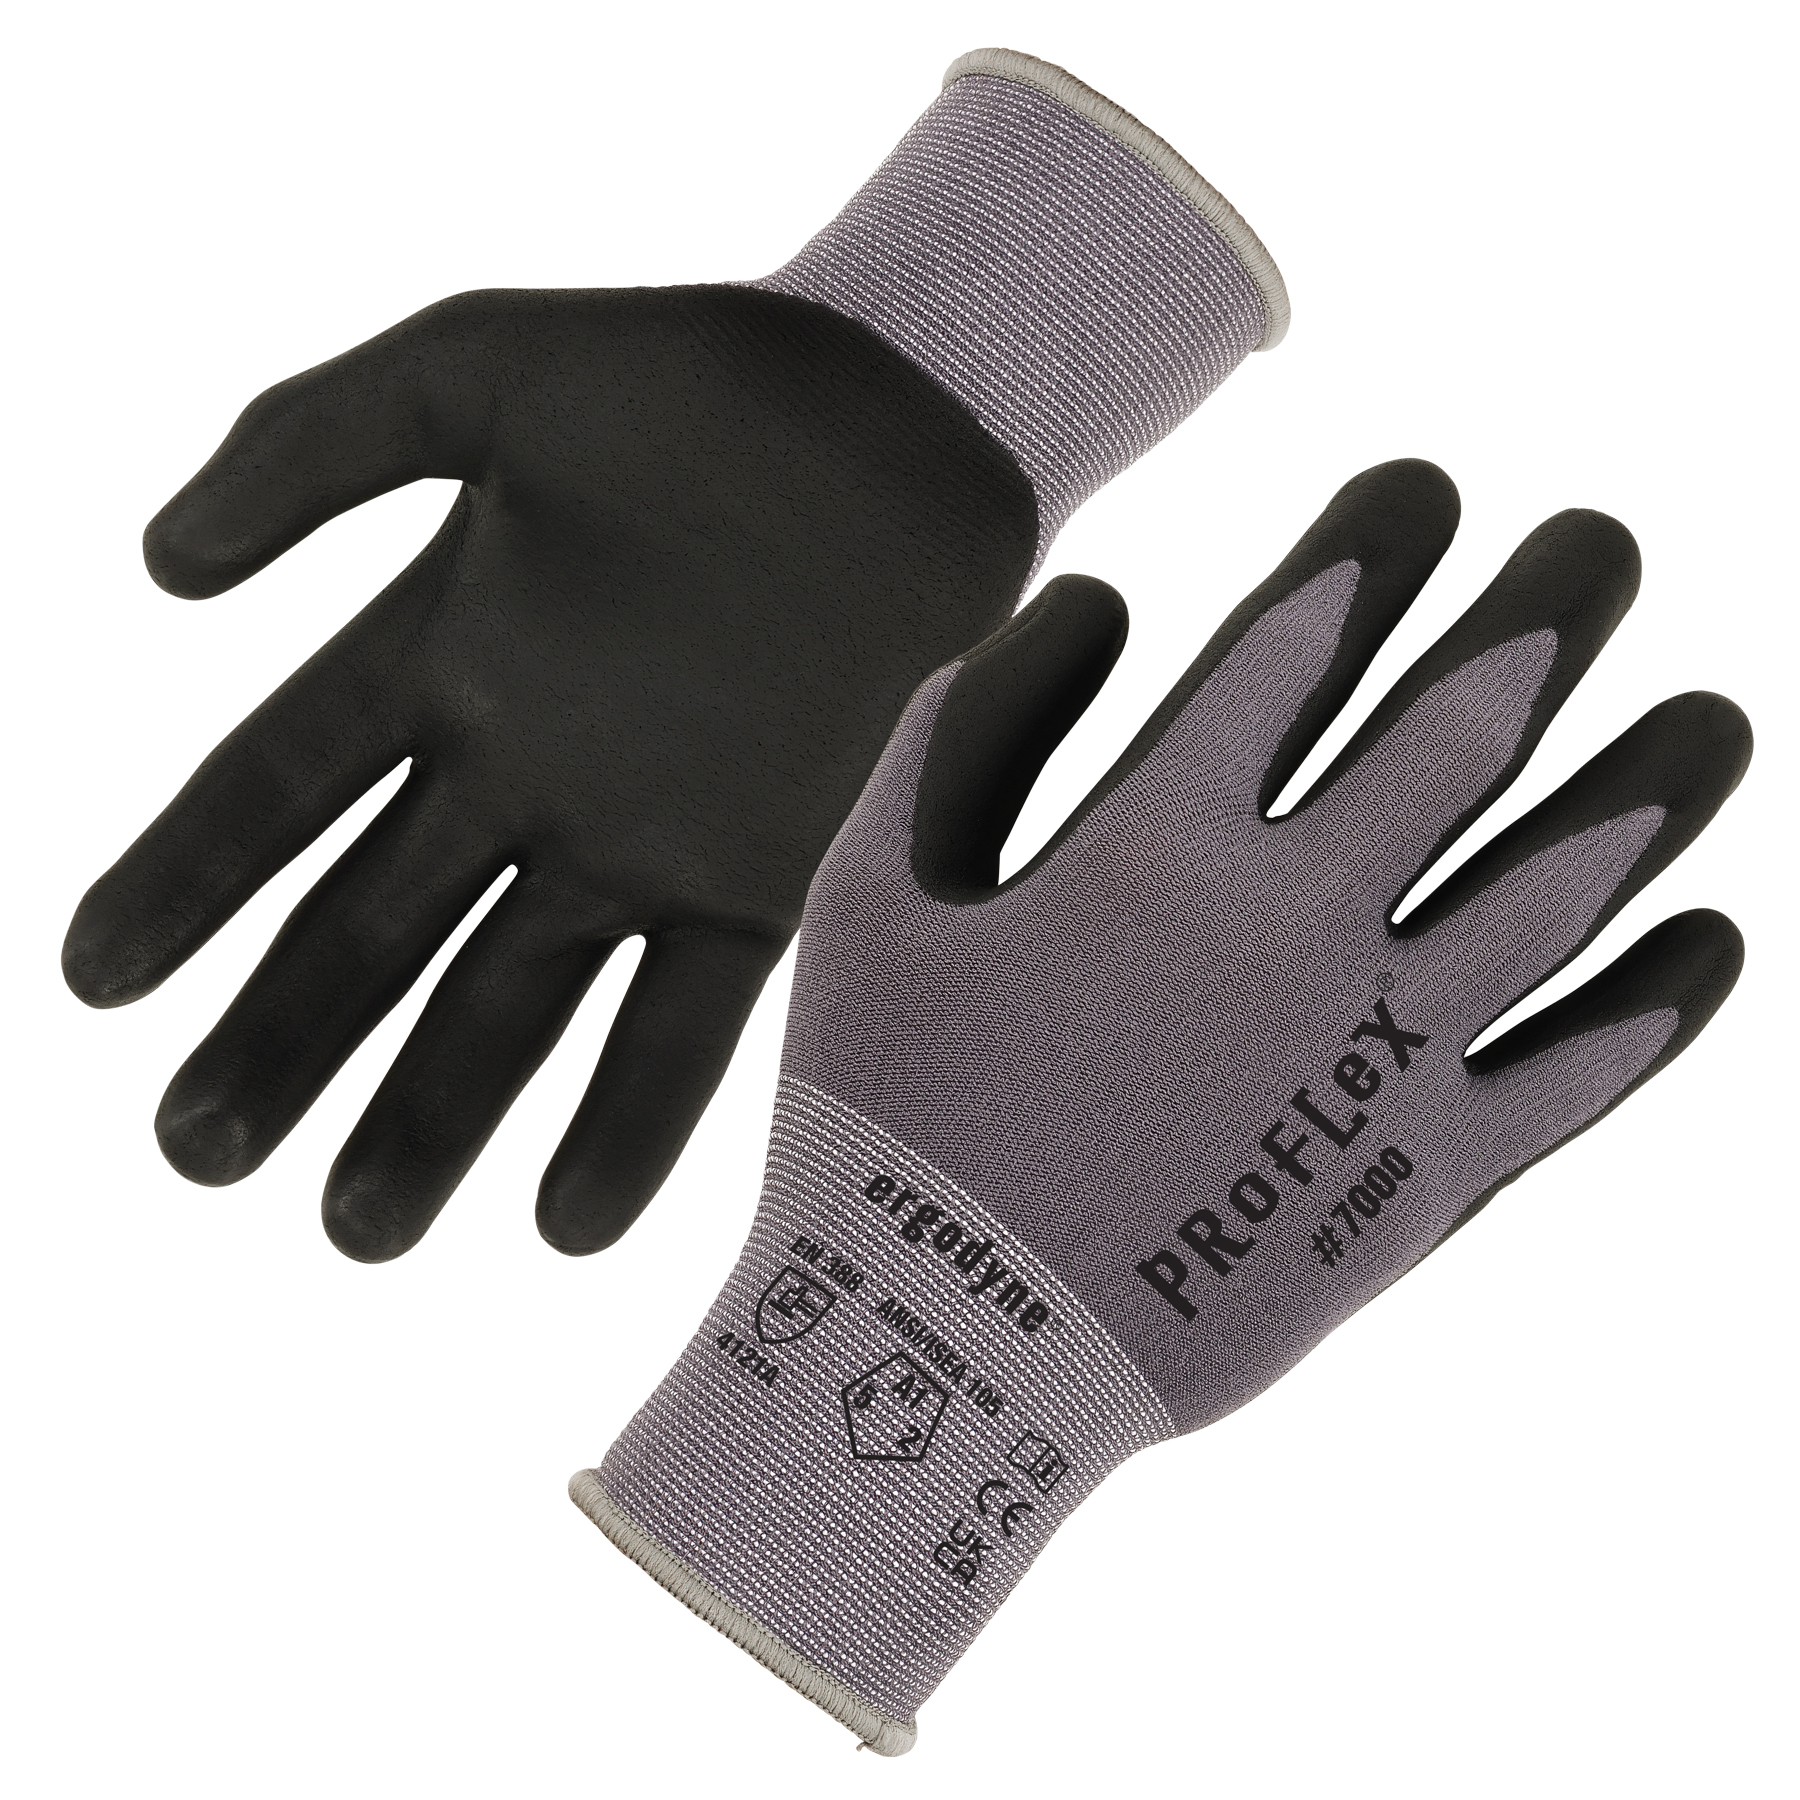 https://www.ergodyne.com/sites/default/files/product-images/10371-7000-nitrile-coated-gloves-microfoam-palm-grey-pair_0.jpg